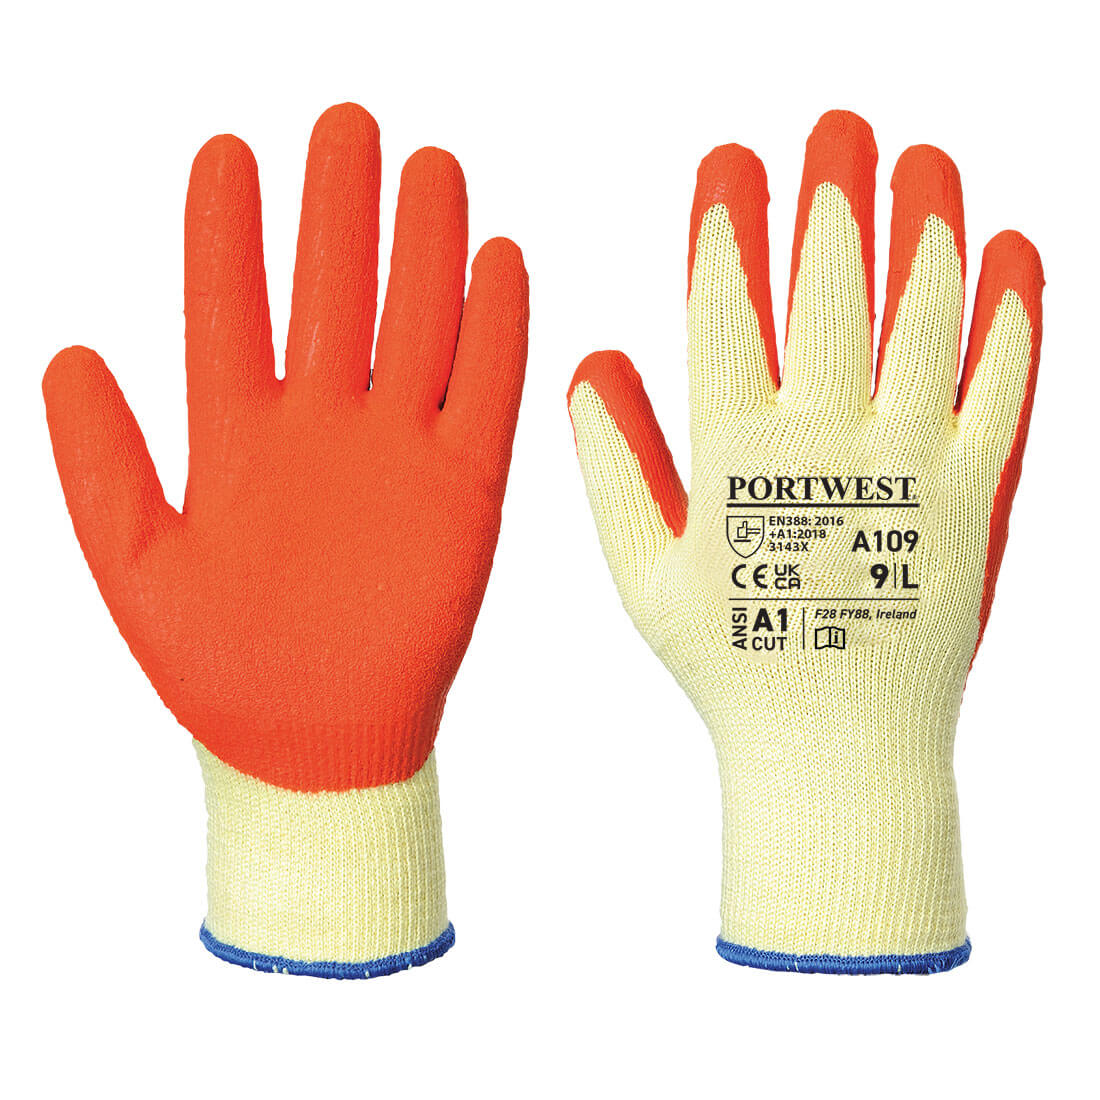 A109 - Grip Glove (impachetare pentru Retail) - Delta Plan